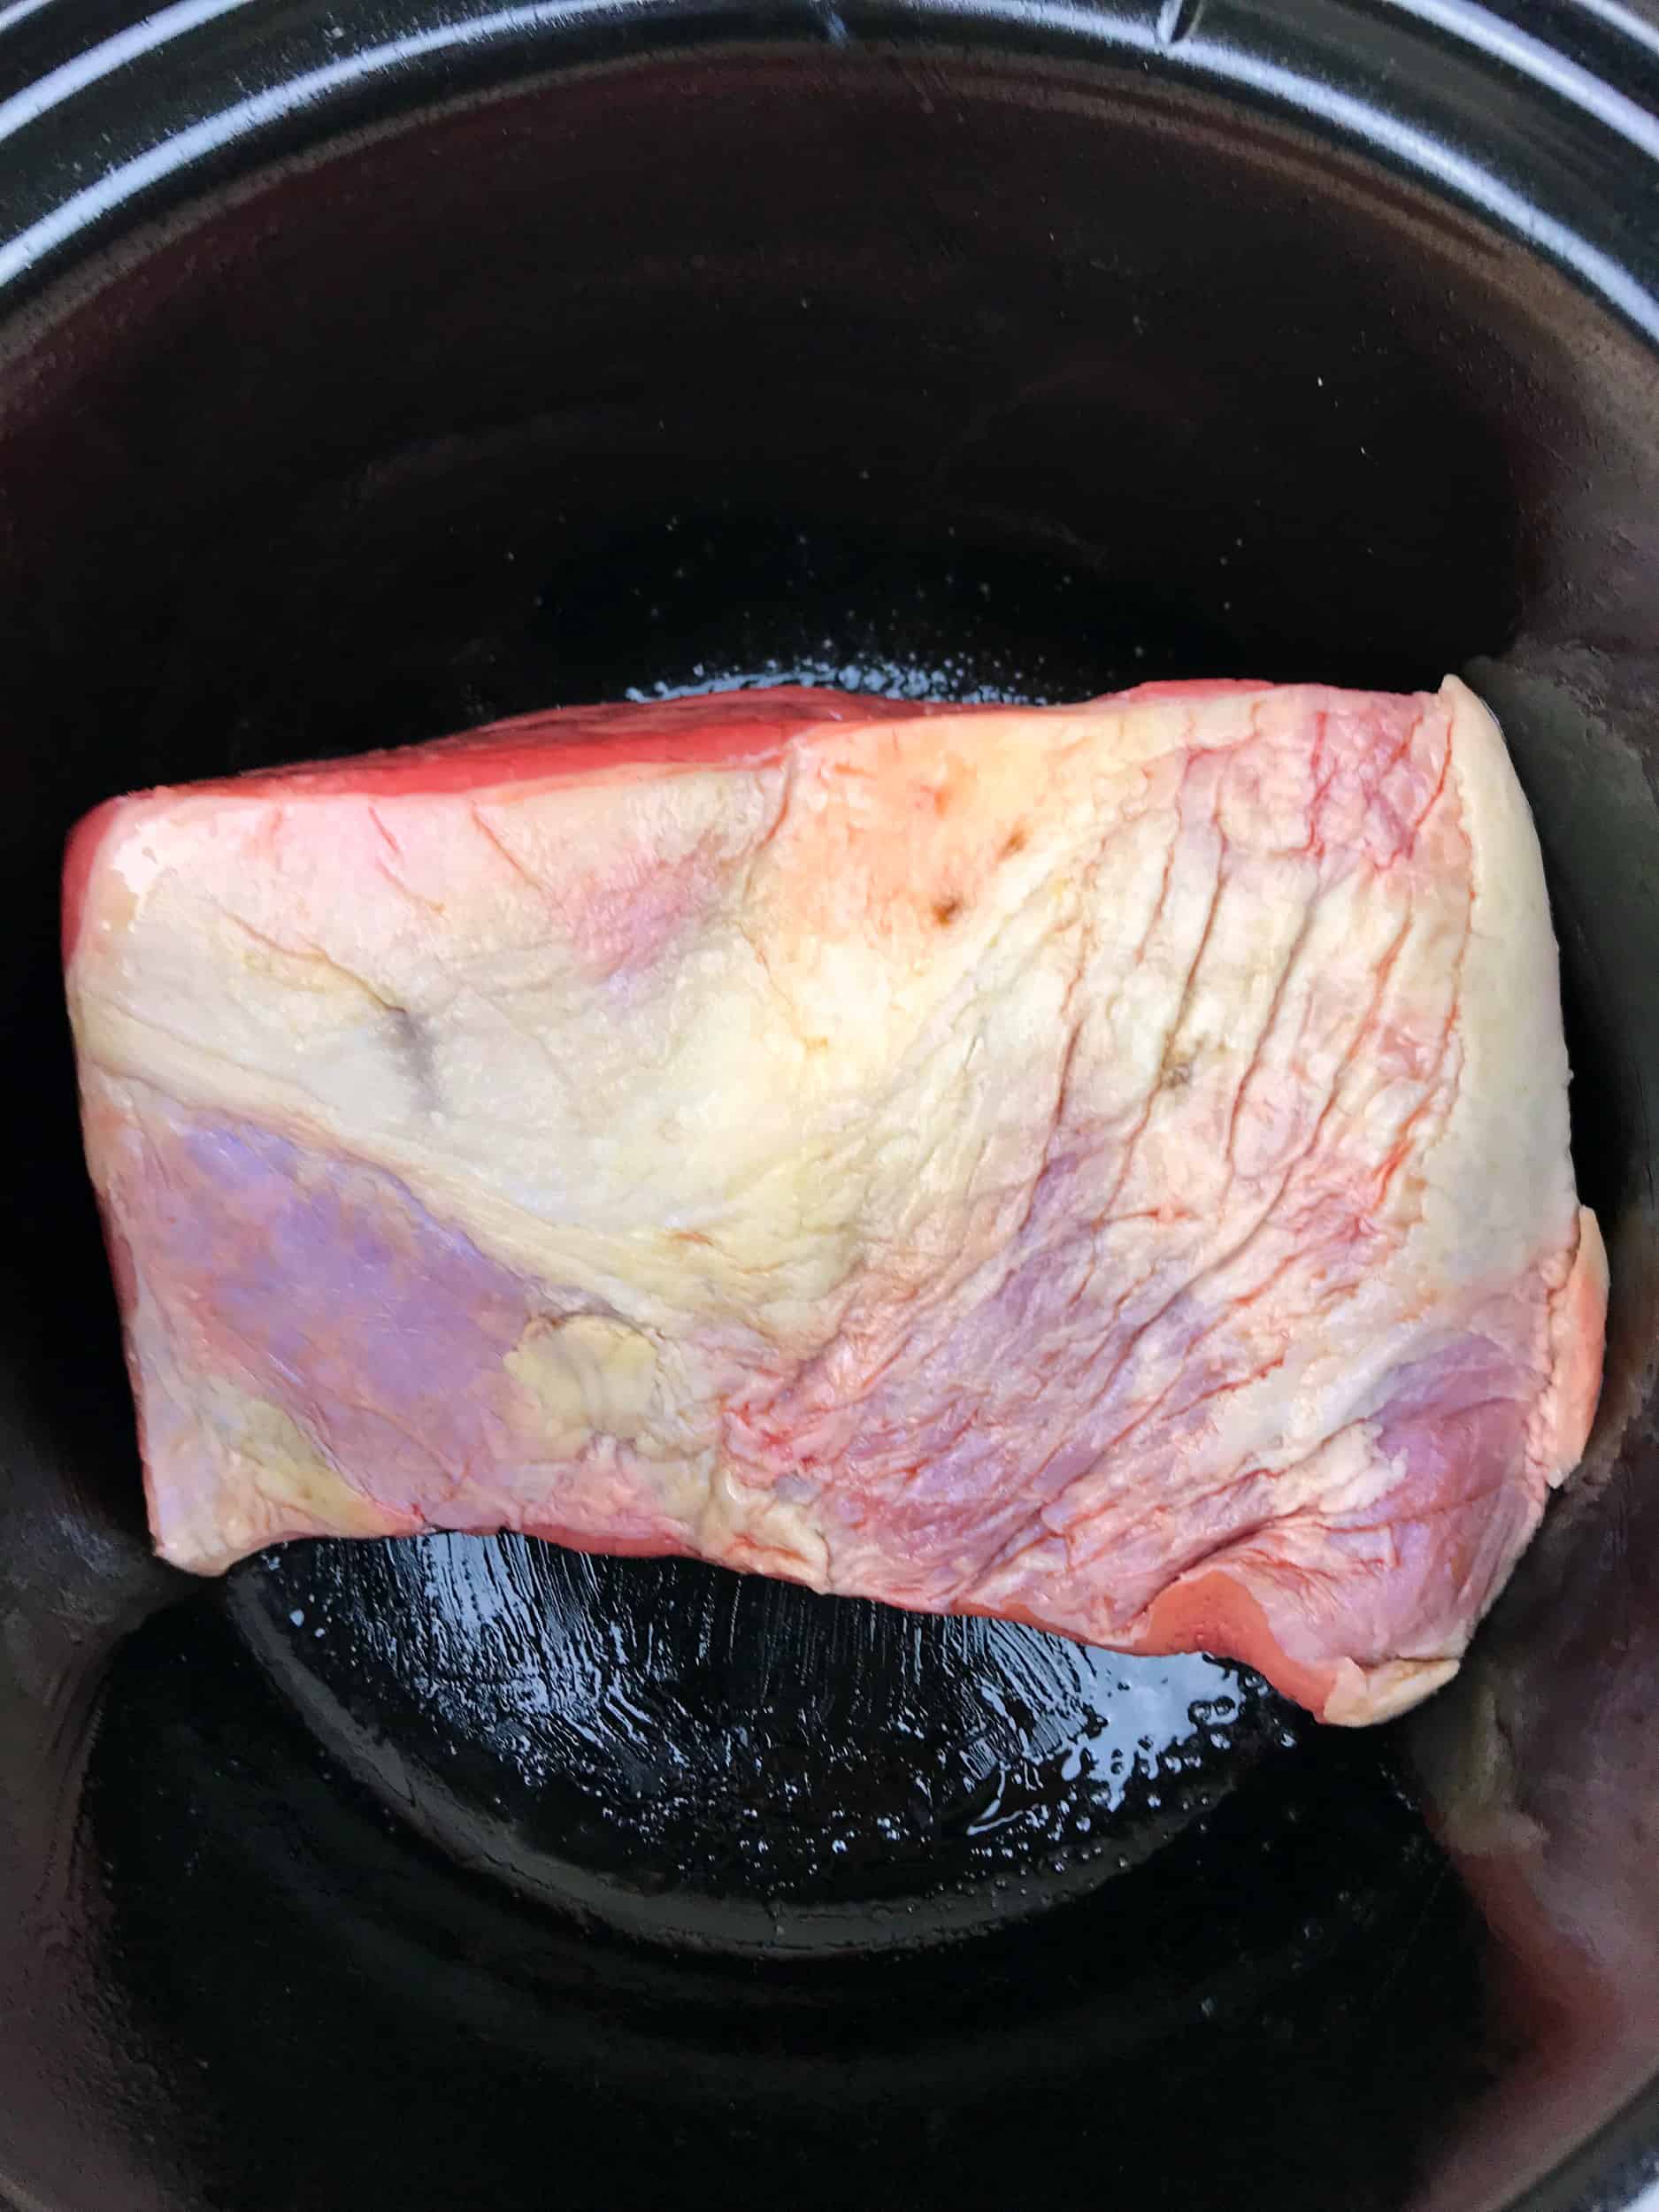 pot roast in slow cooker